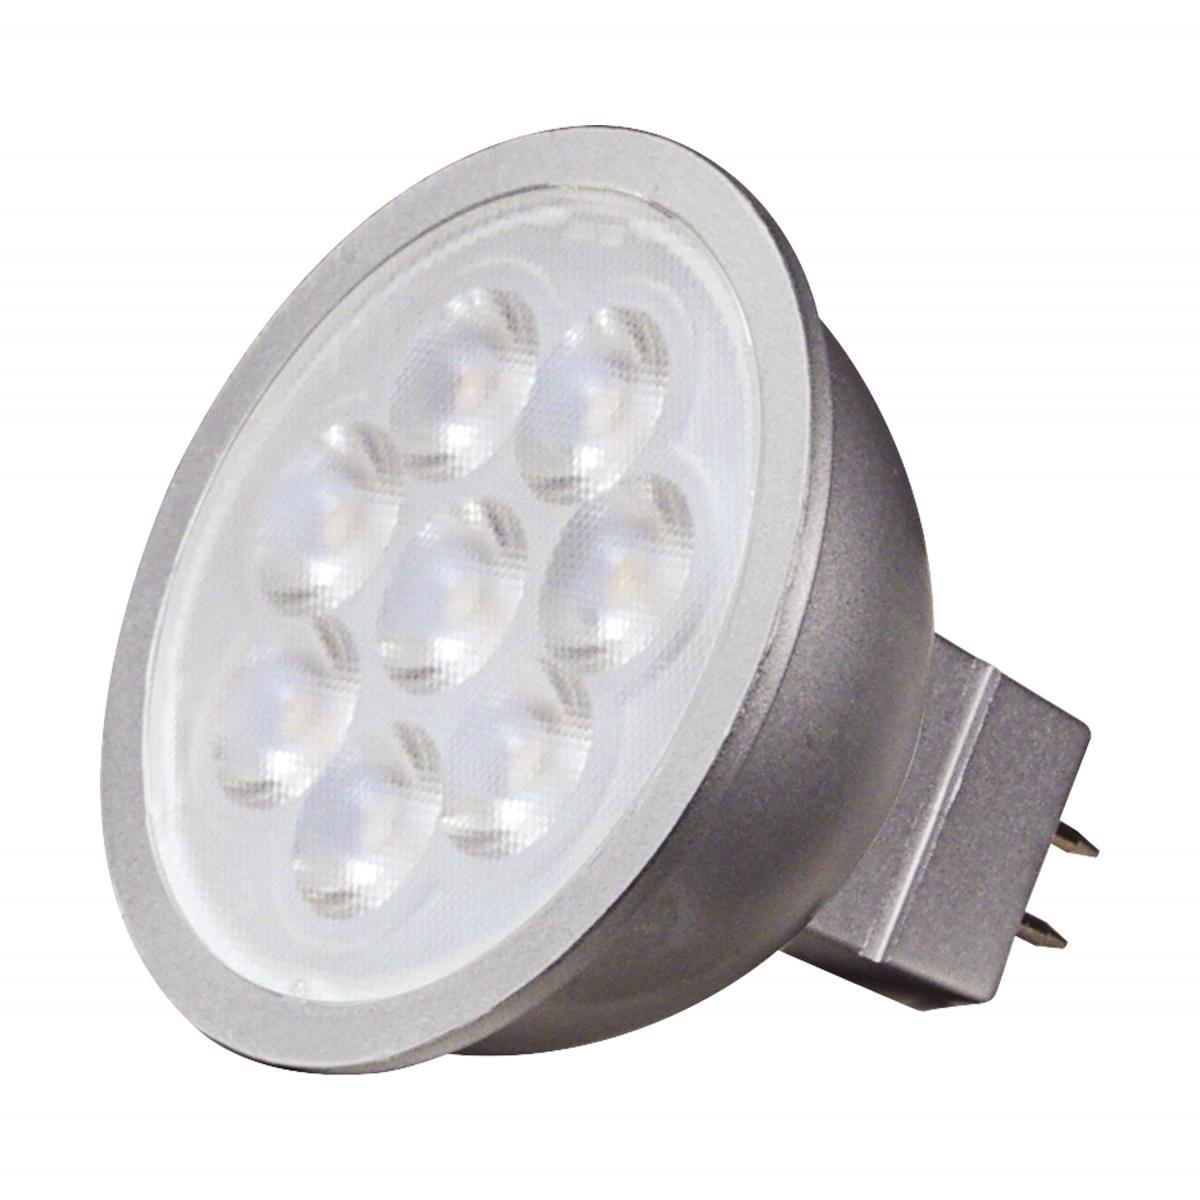 MR16 Reflector LED bulb, 6 watt, 450 Lumens, 2700K, GU5.3 Base, 40 Deg. Flood